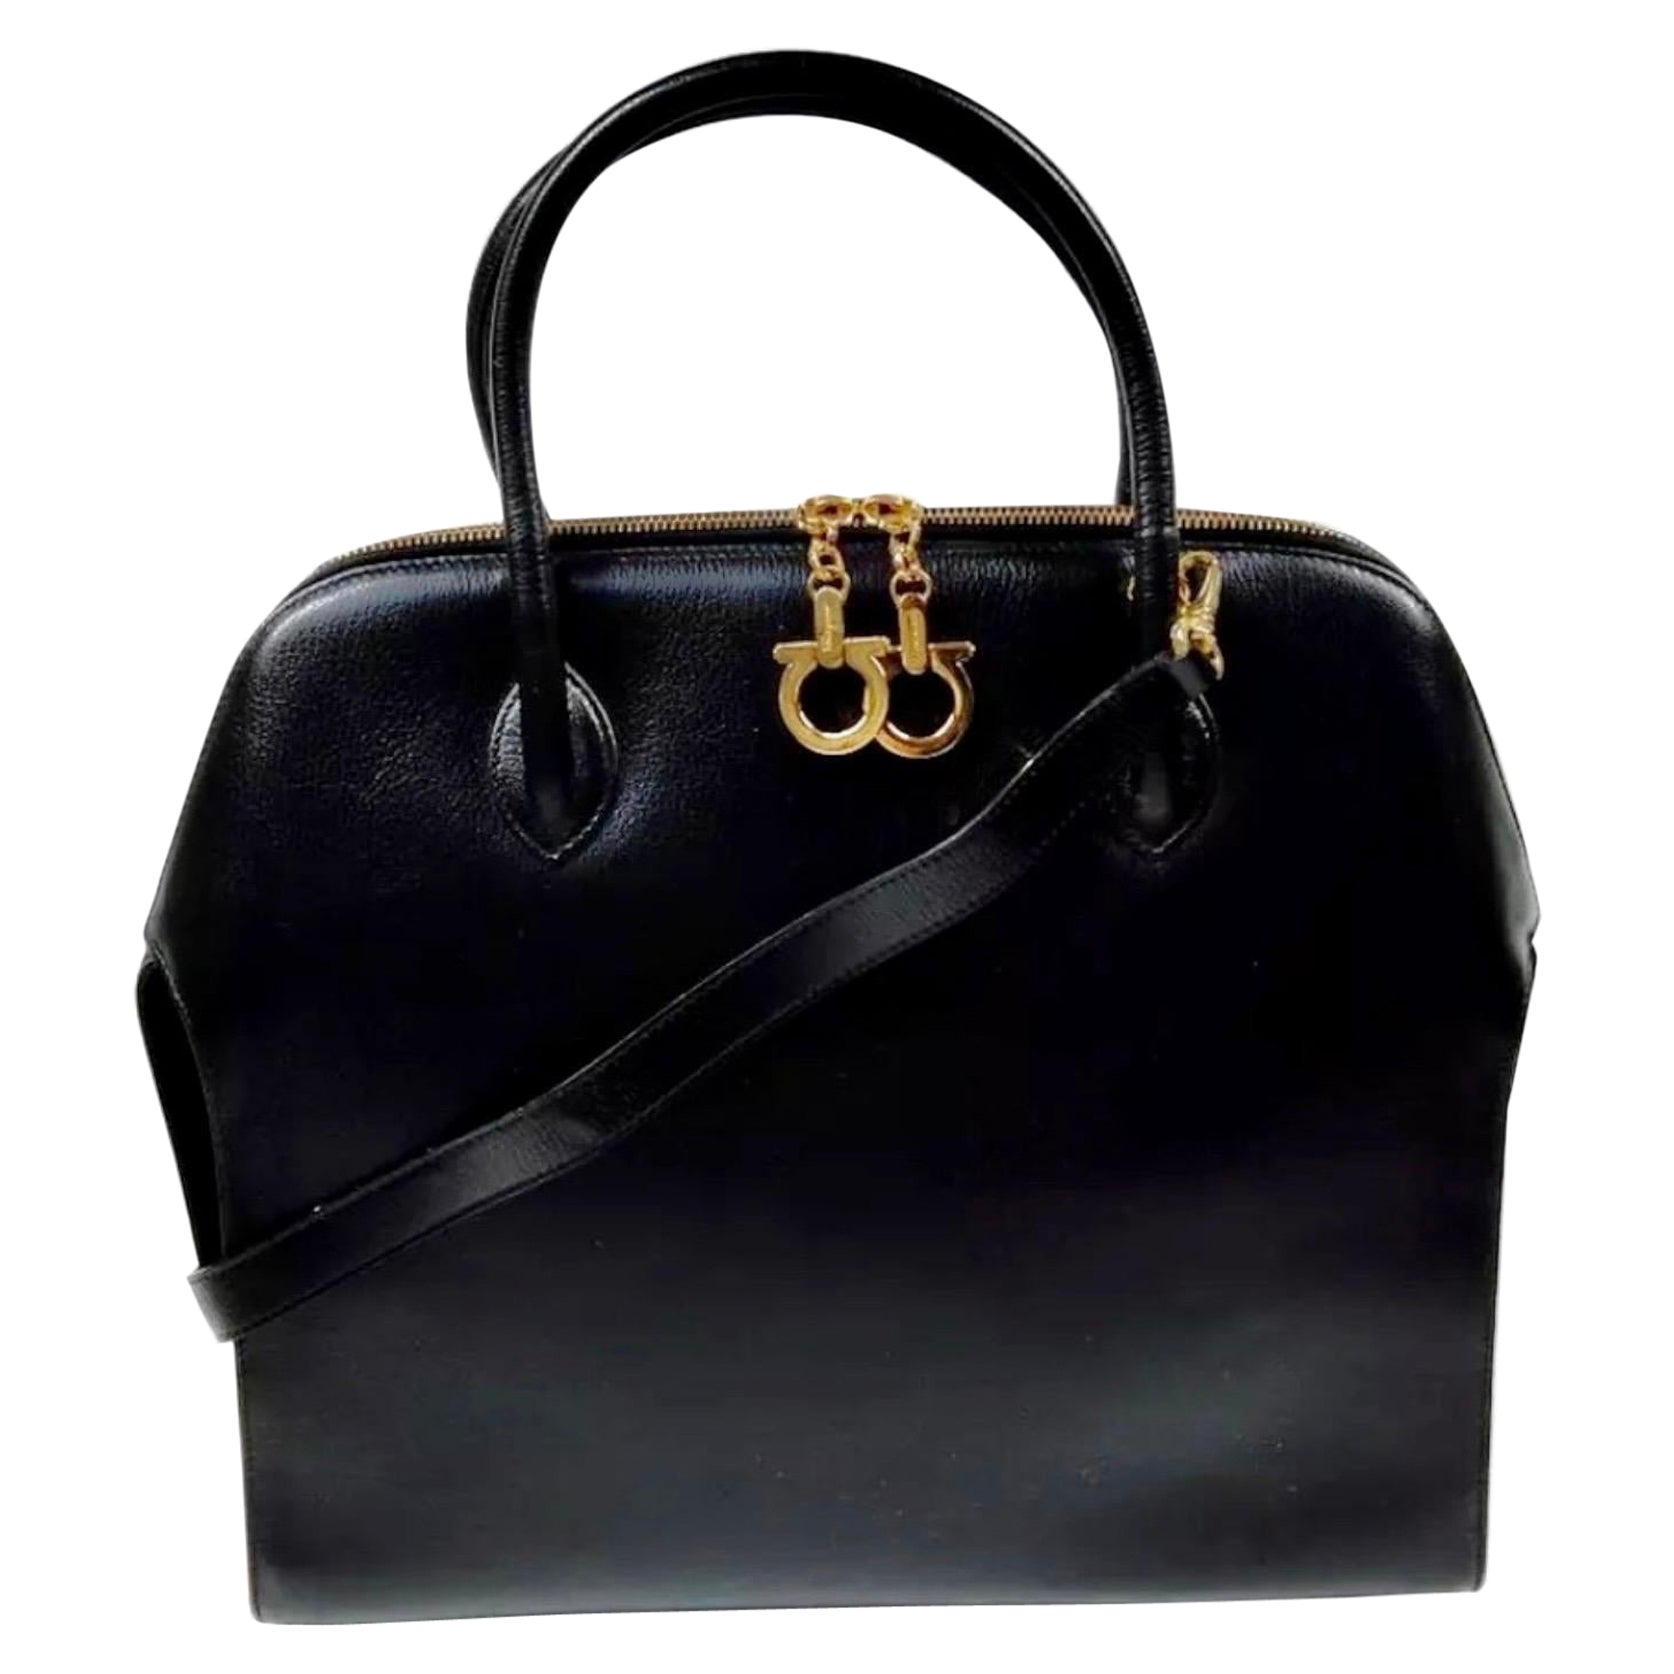 Salvatore Ferragamo Black  Leather Tote / Shoulder Bag Large with Gold Hardware